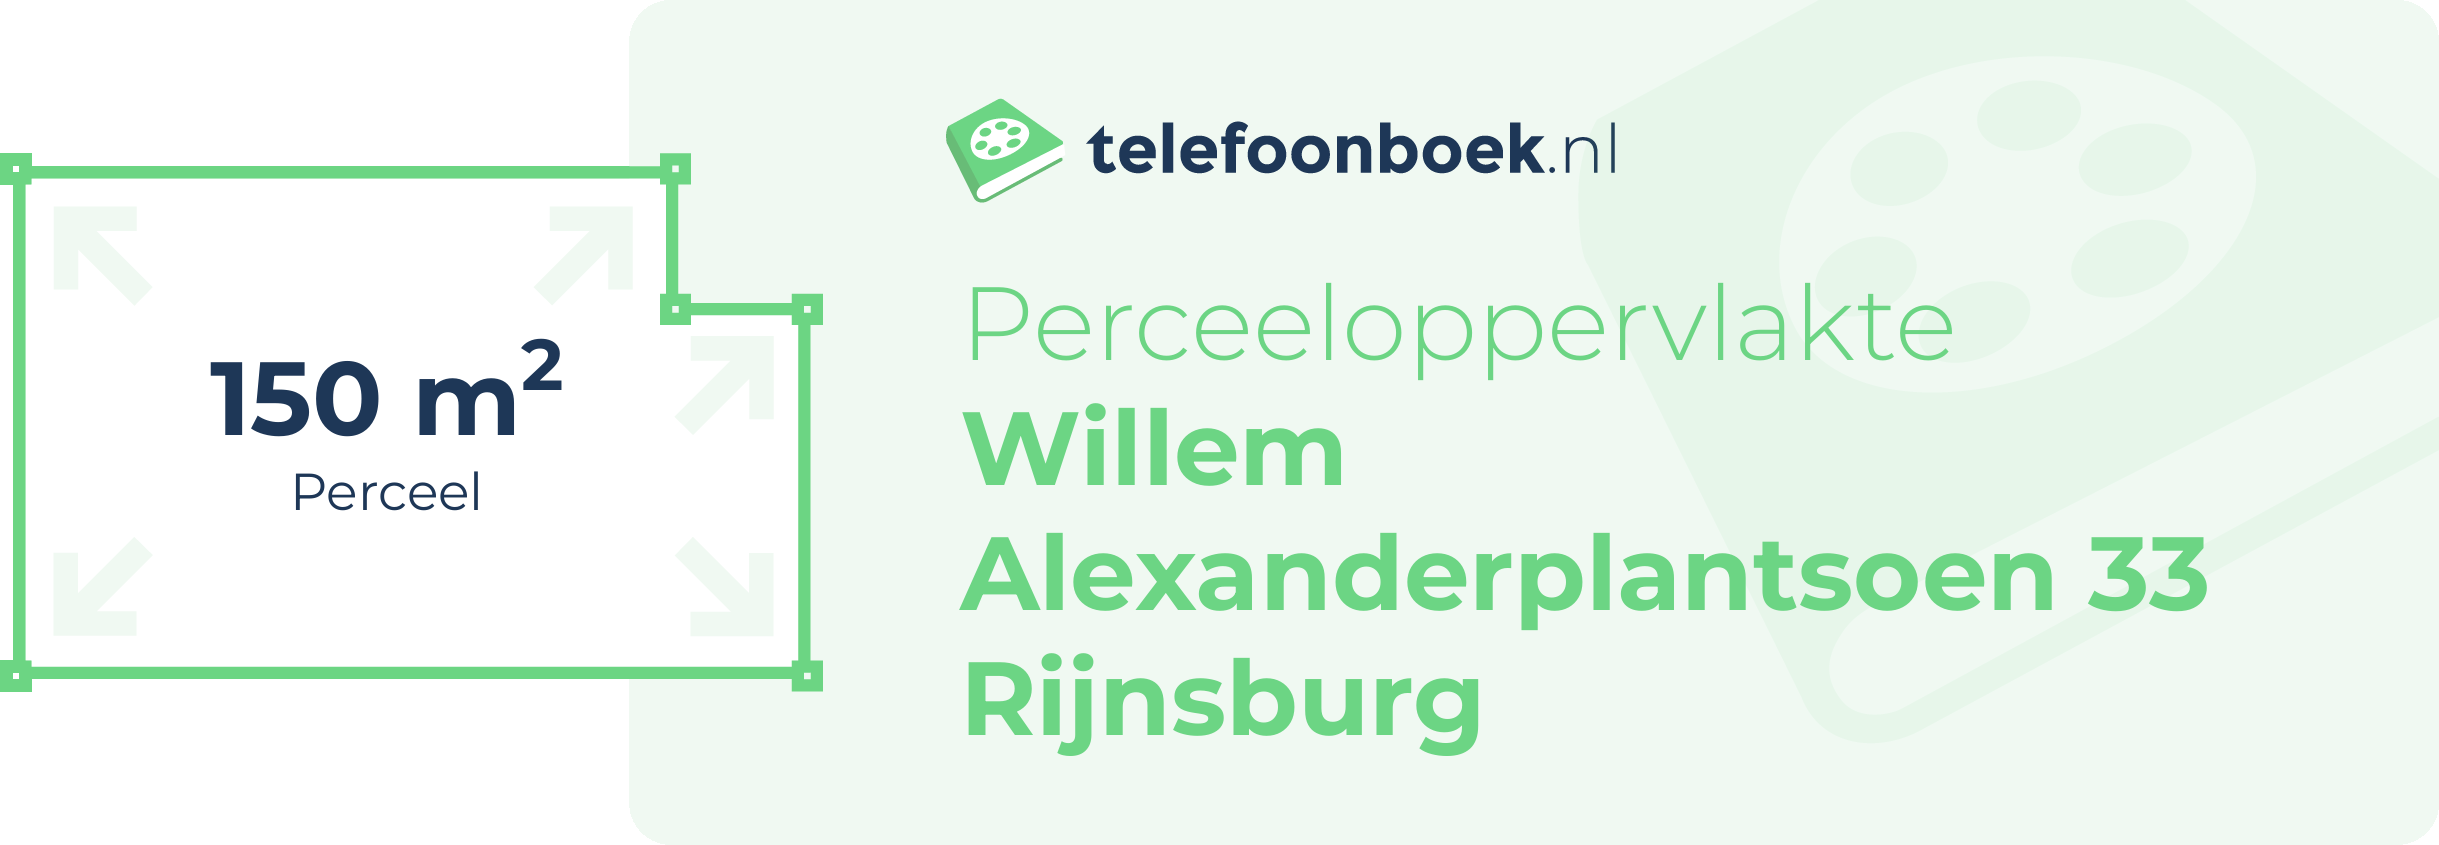 Perceeloppervlakte Willem Alexanderplantsoen 33 Rijnsburg